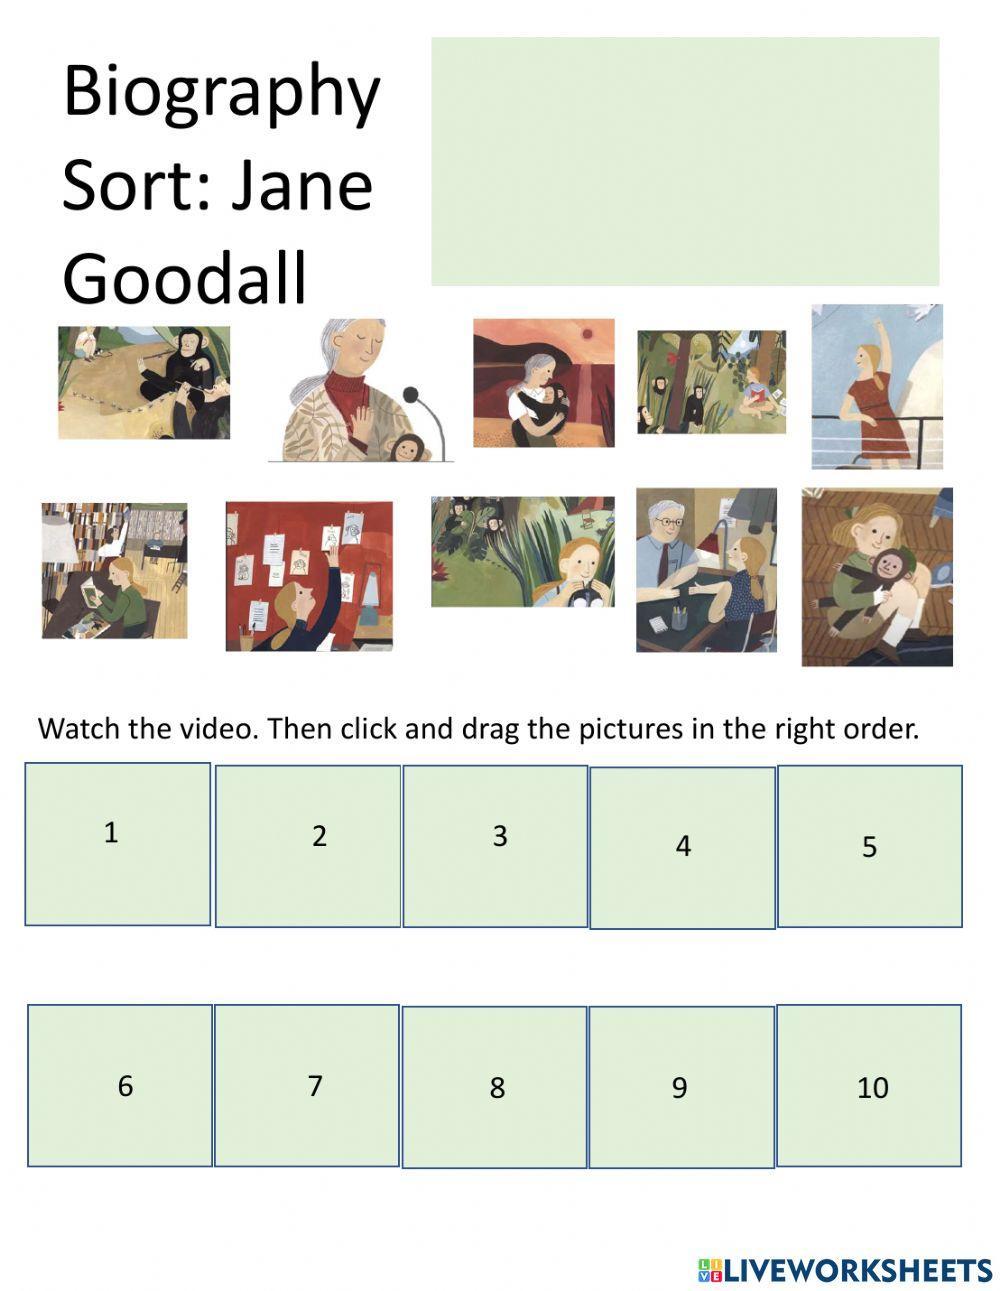 Biography sort: Jane Goodall